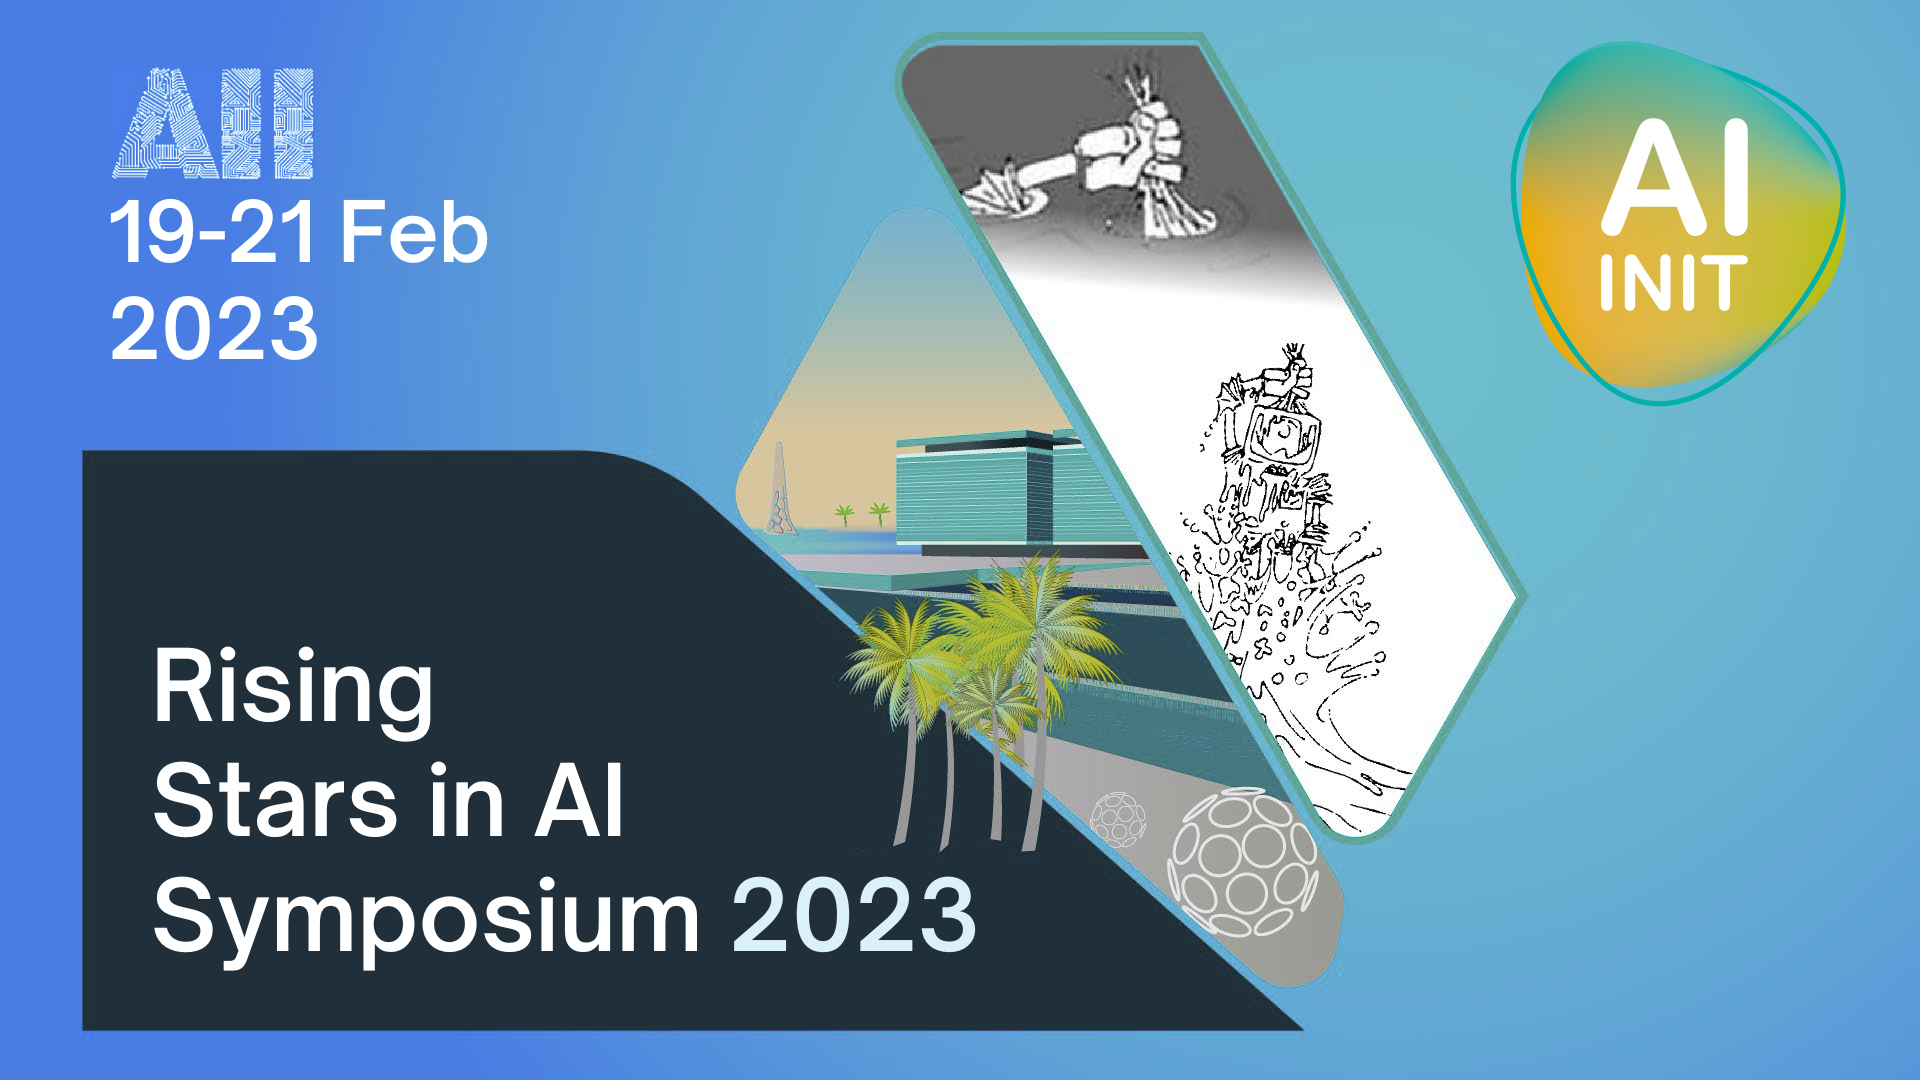 KAUST AI Rising starts symposium 2023 